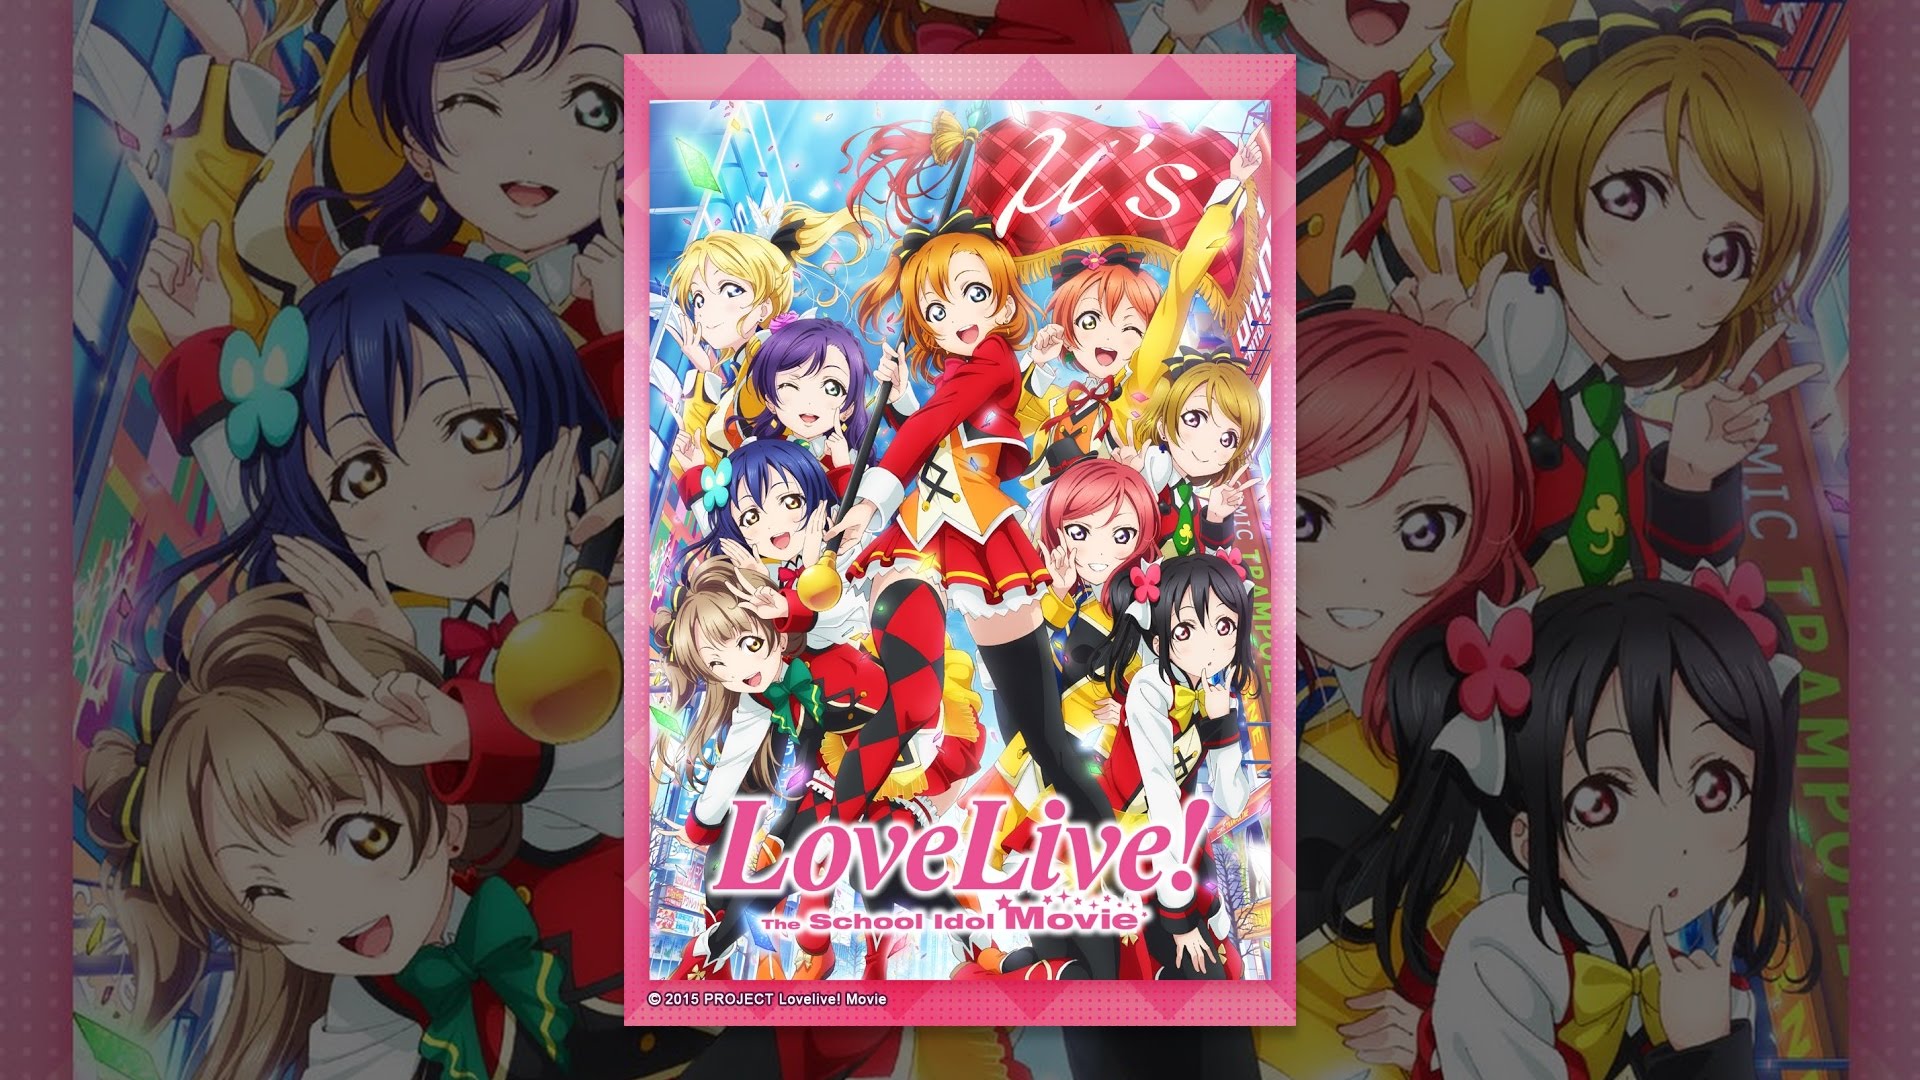 Love Live!: The School Idol Movie (Original Japanese Version)